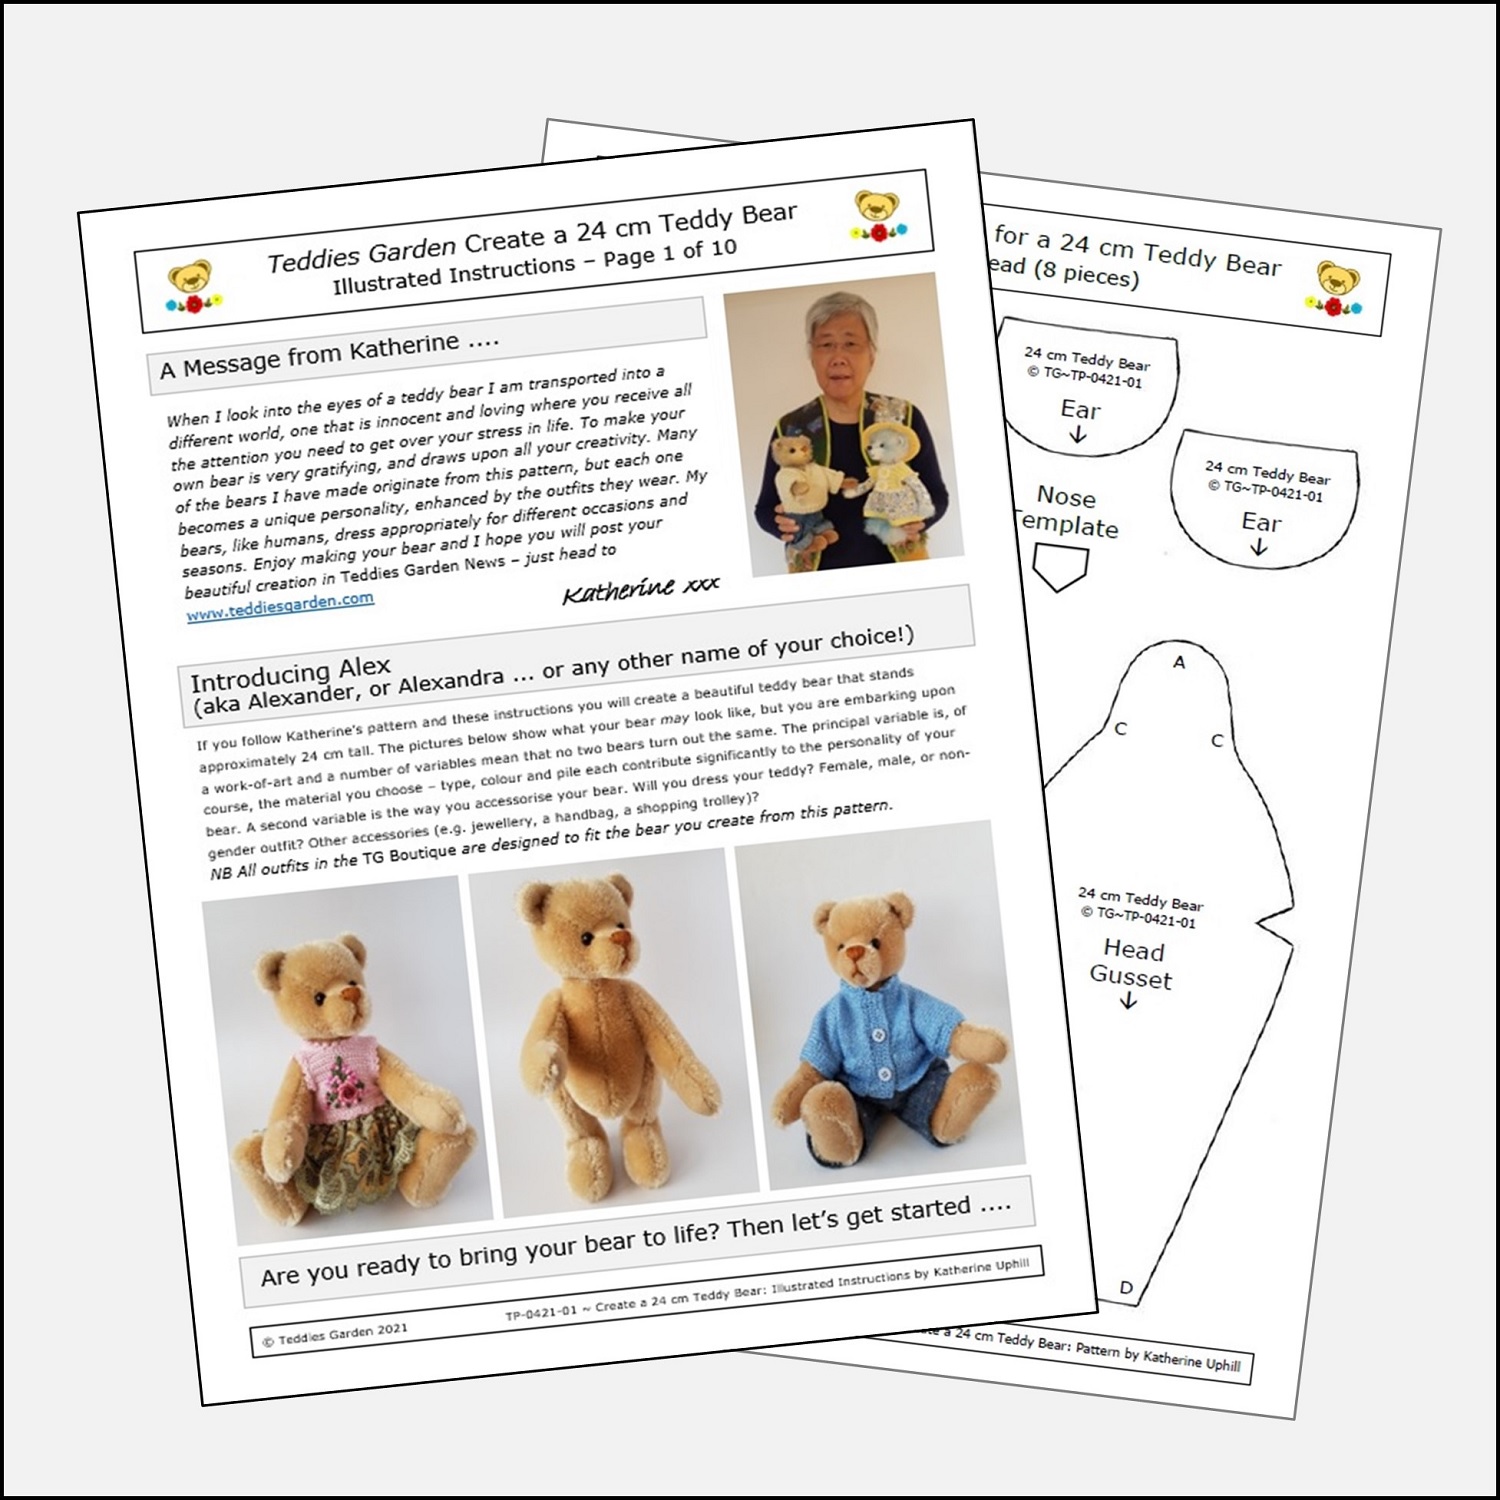 Pattern and Instructions for 'Create a 24 cm Teddy Bear' - Teddies Garden